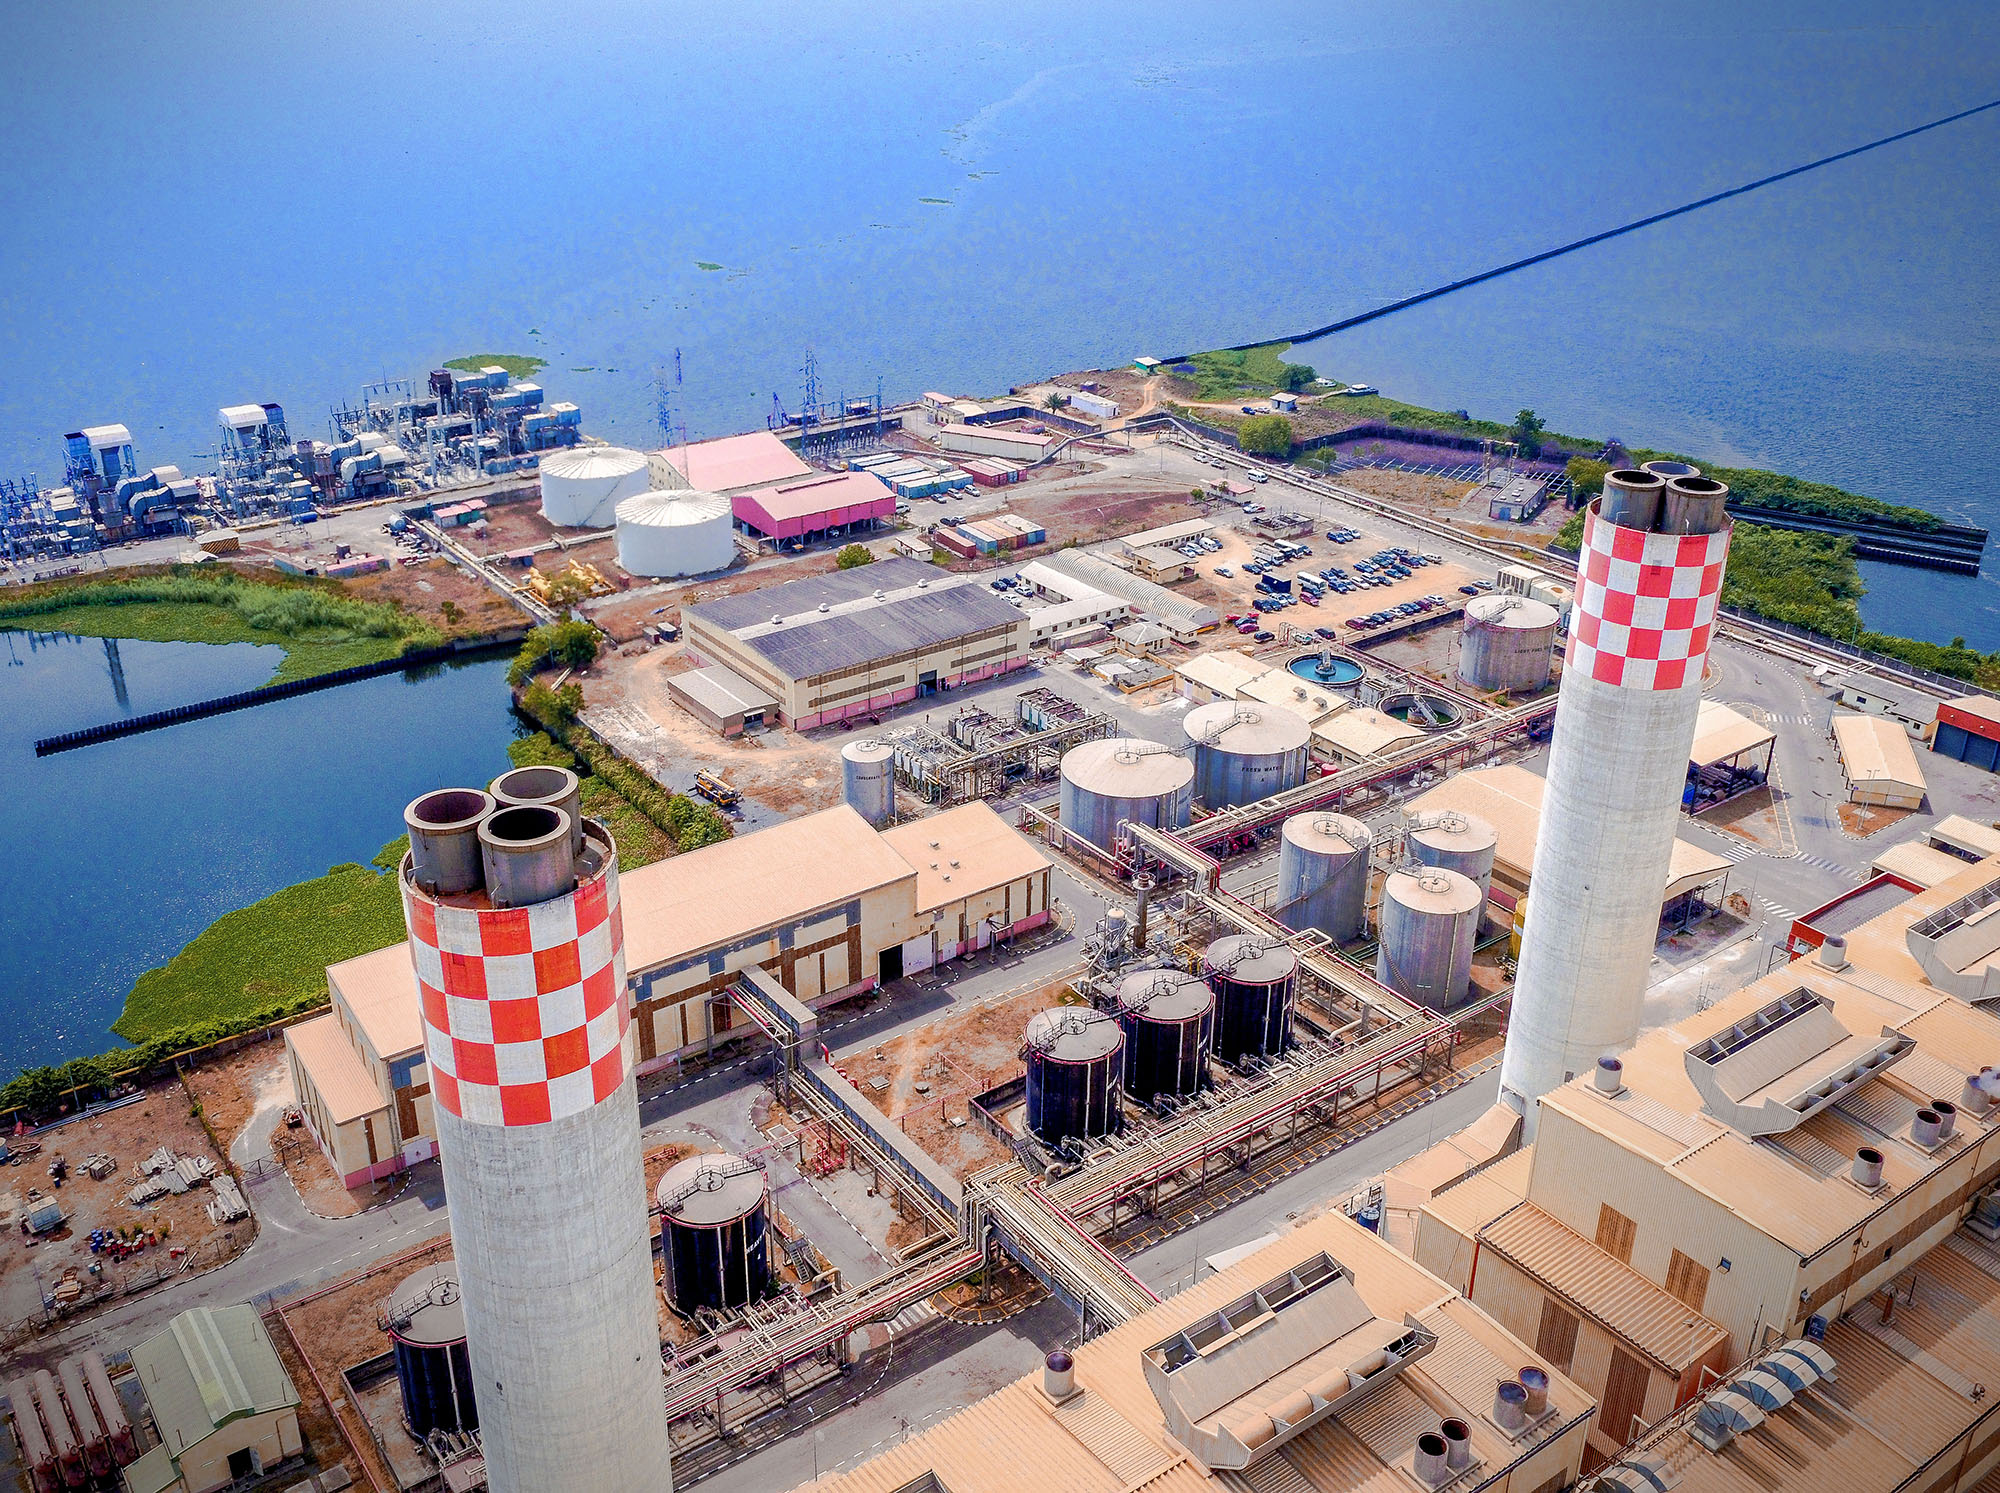 Sahara Power Group Backs Afcfta to Transform Africa’s Power Sector